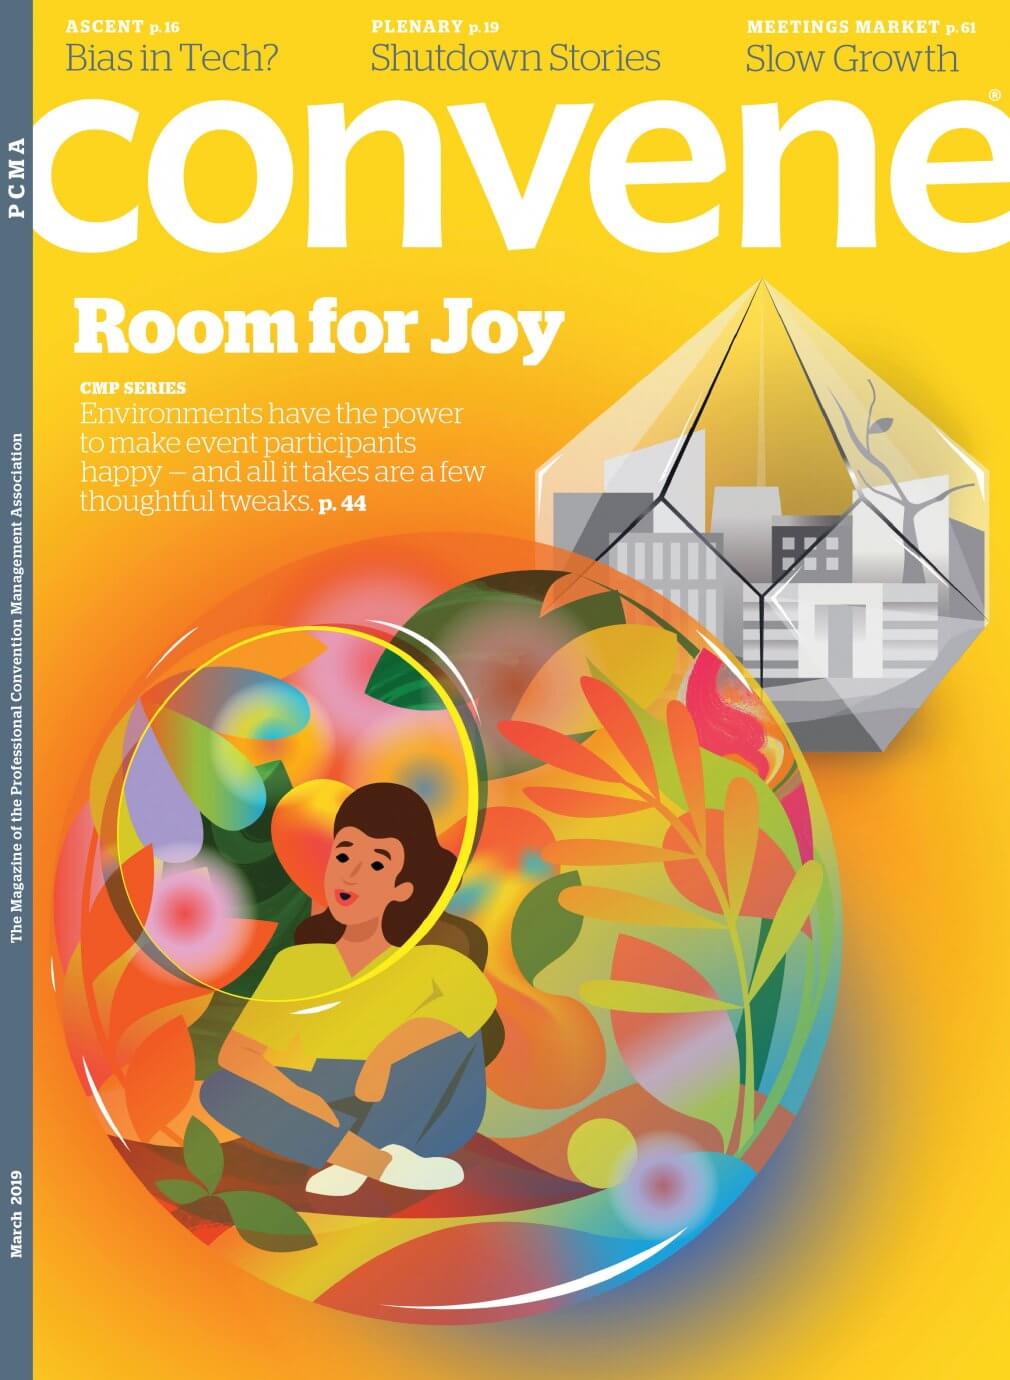 PCMA Convene Magazine